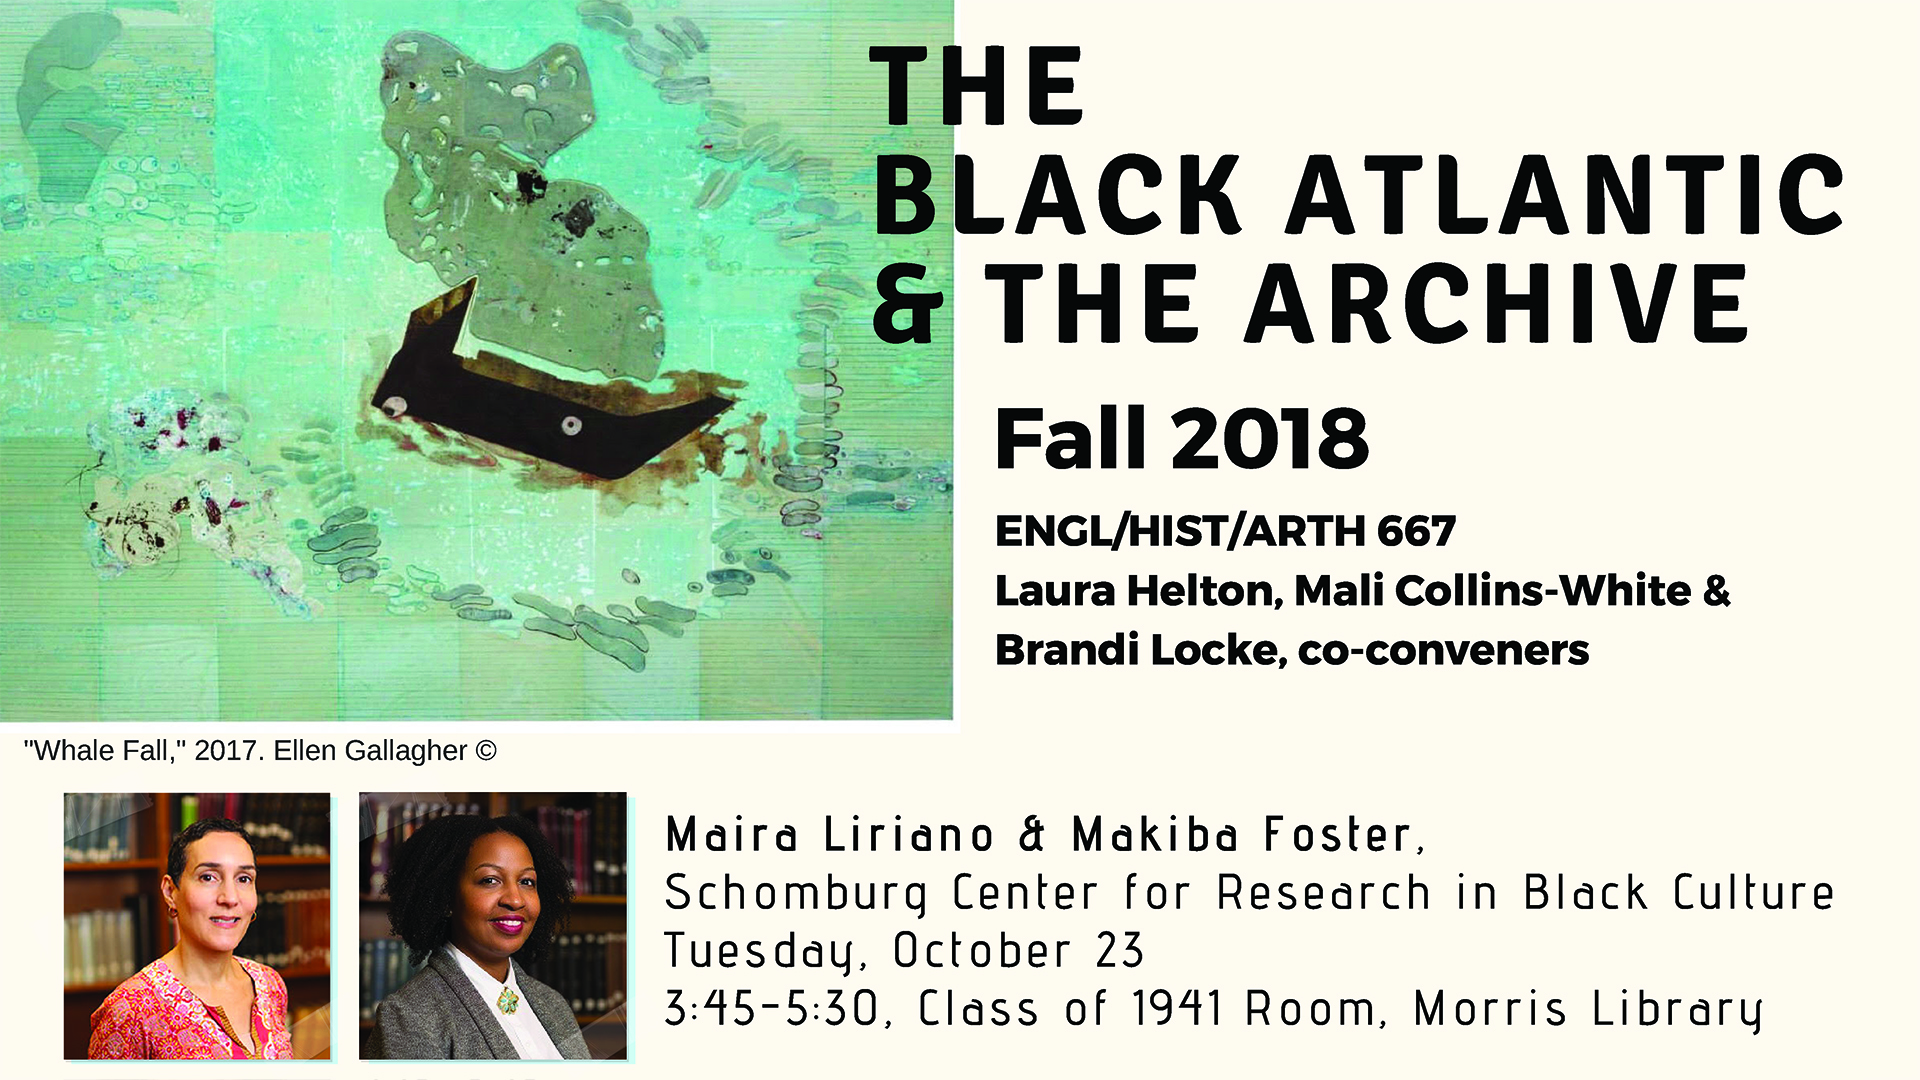 The Black Atlantic & The Archive